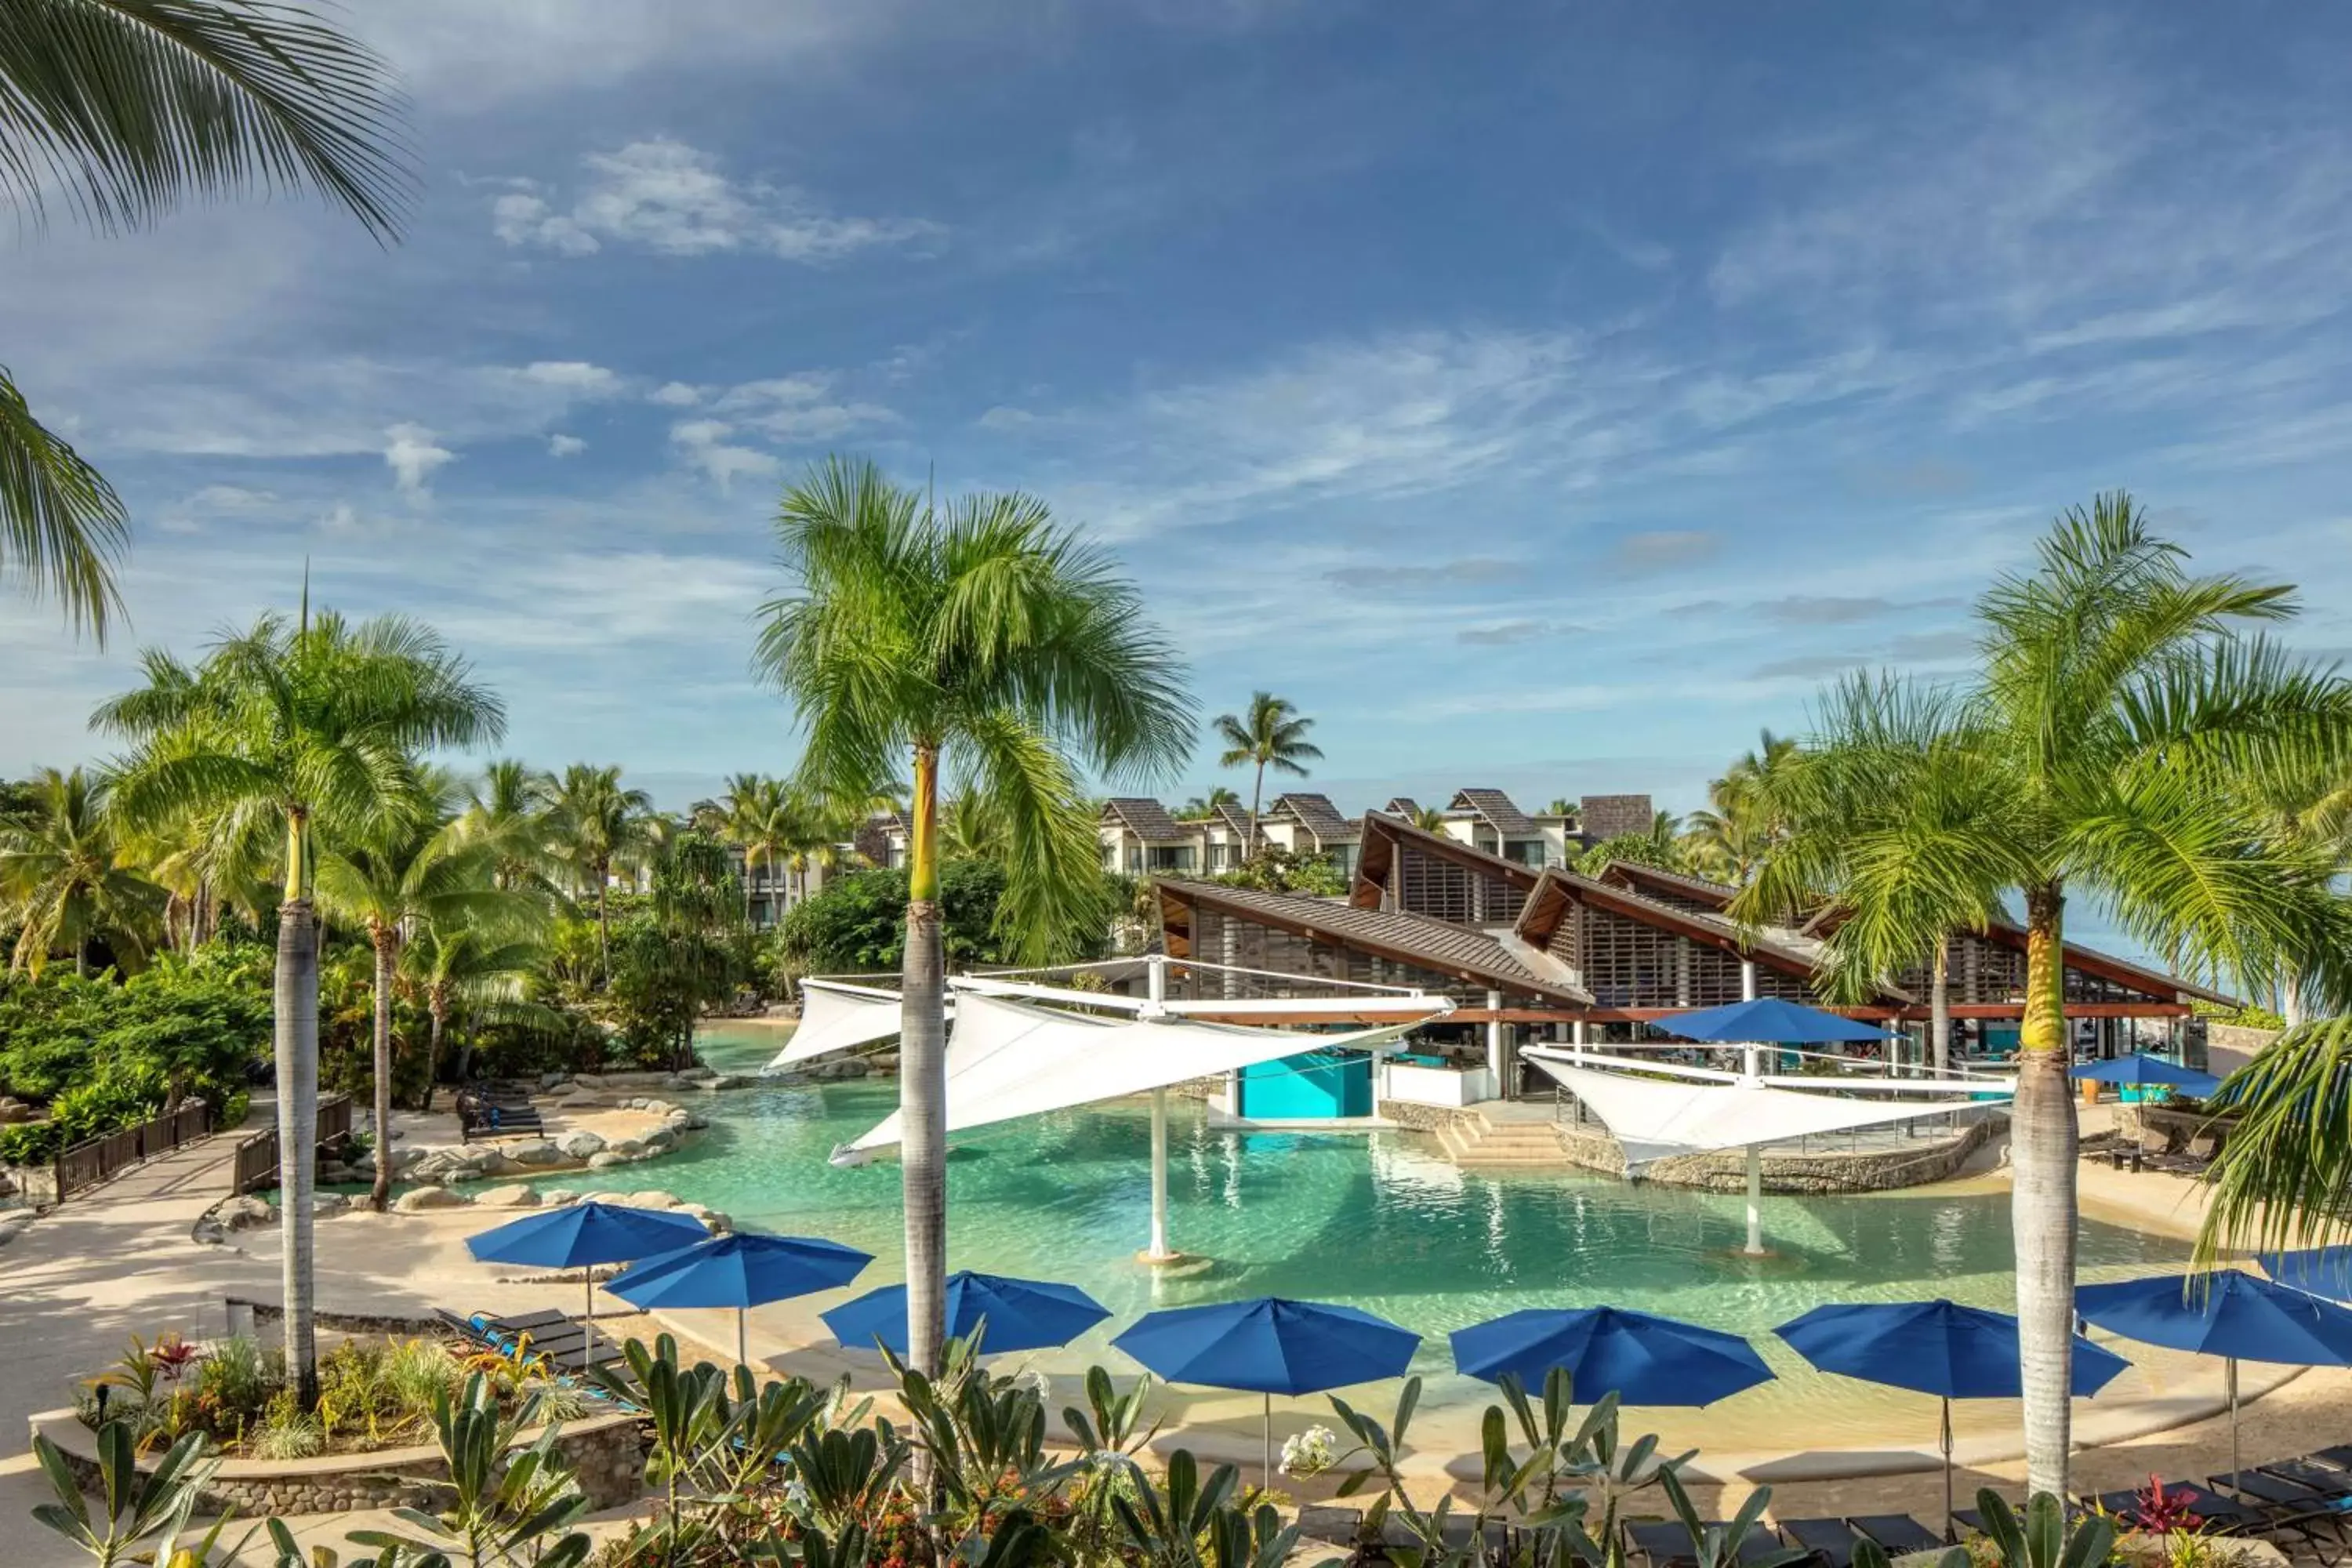 Activities, Swimming Pool in Radisson Blu Resort Fiji